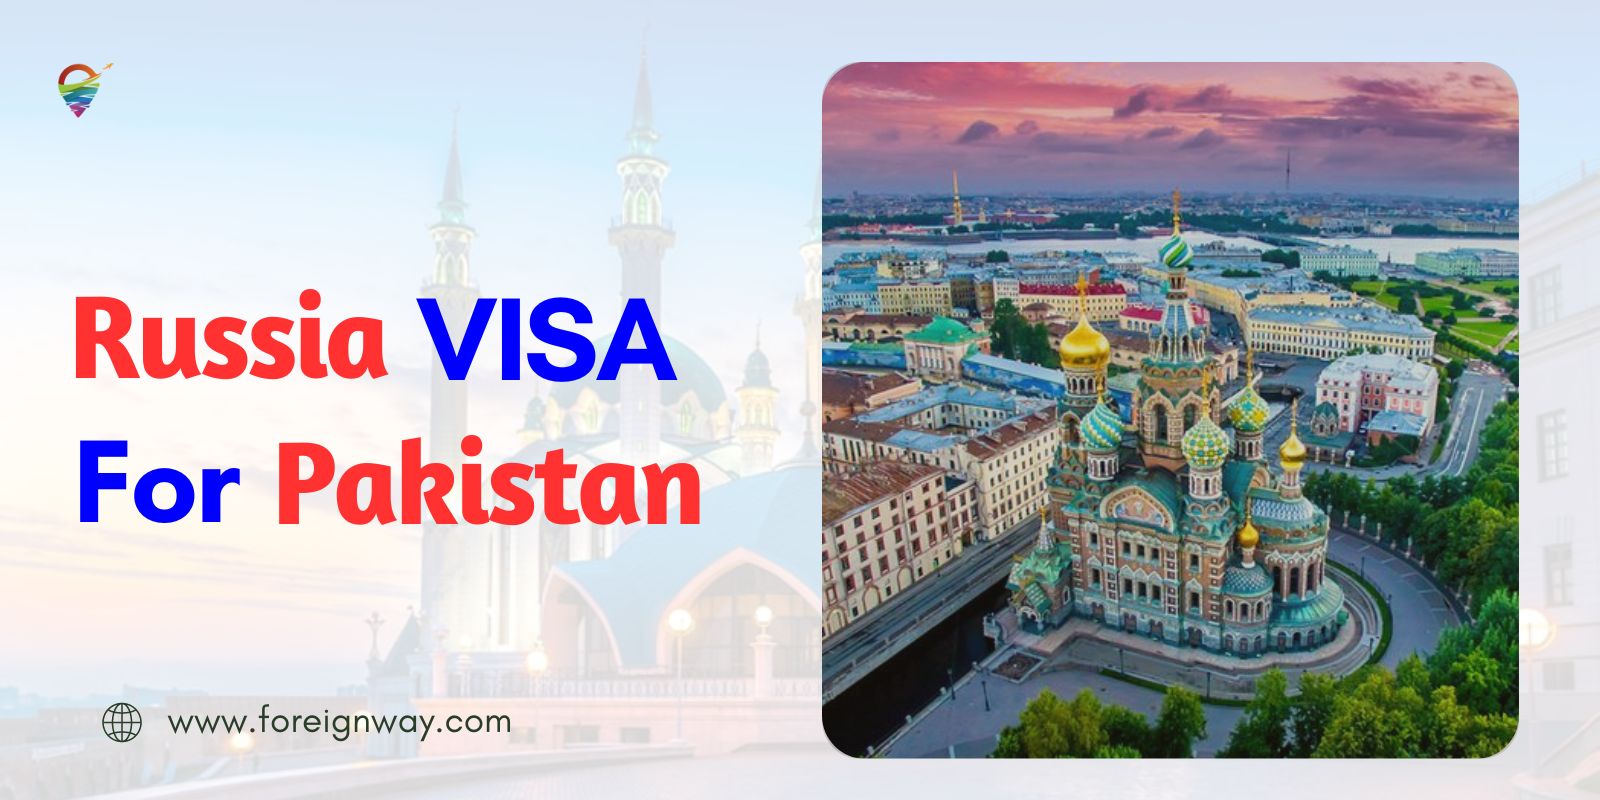 Russia VISA For Pakistan